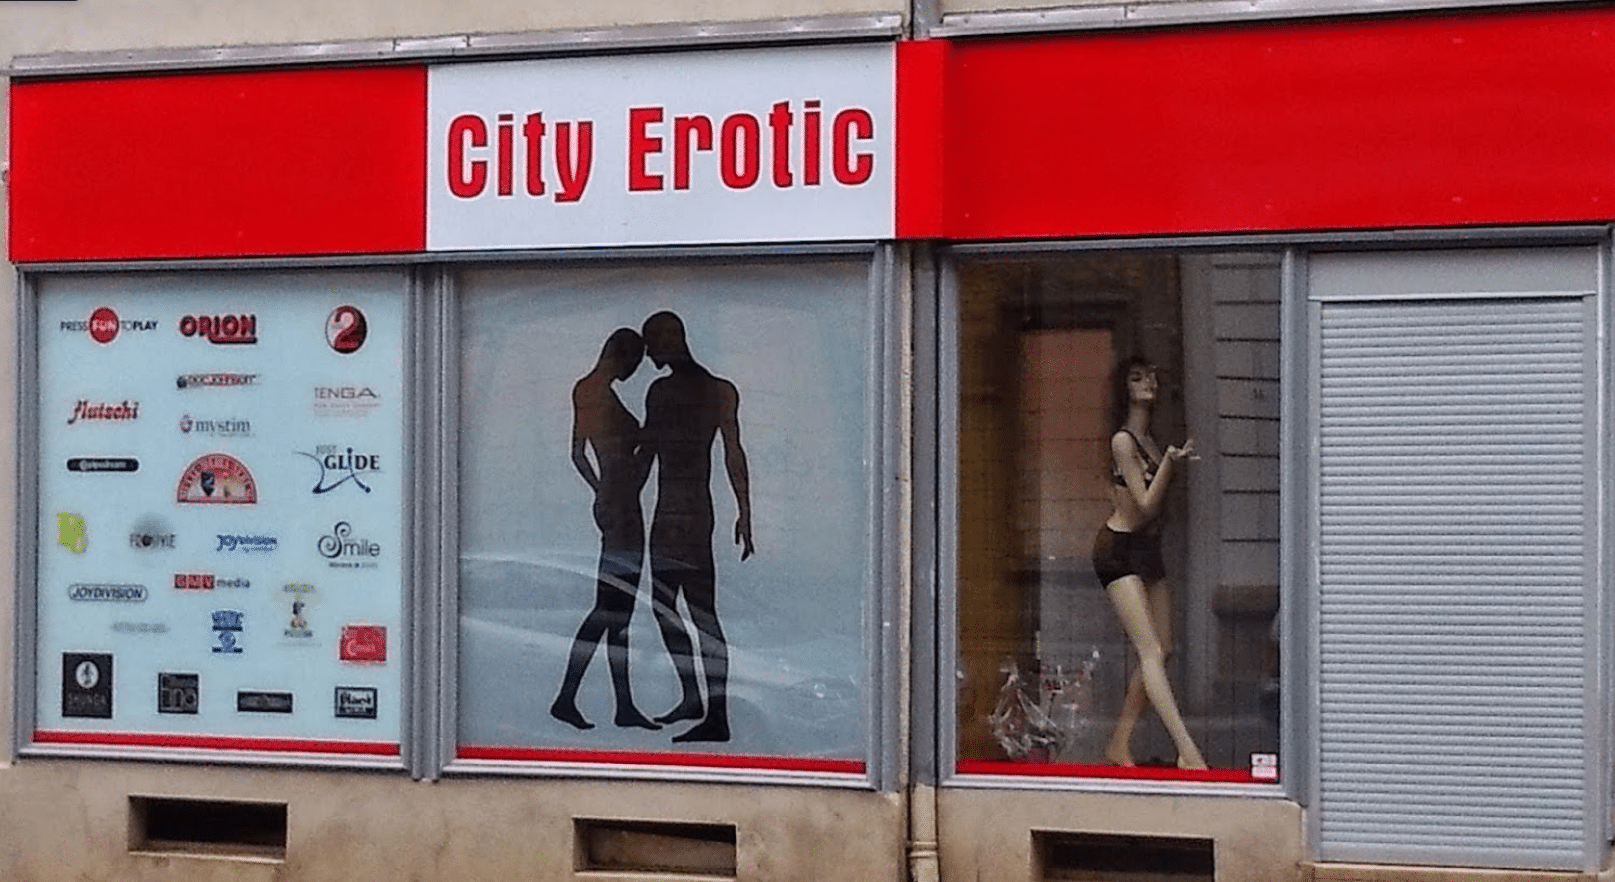 City erotik